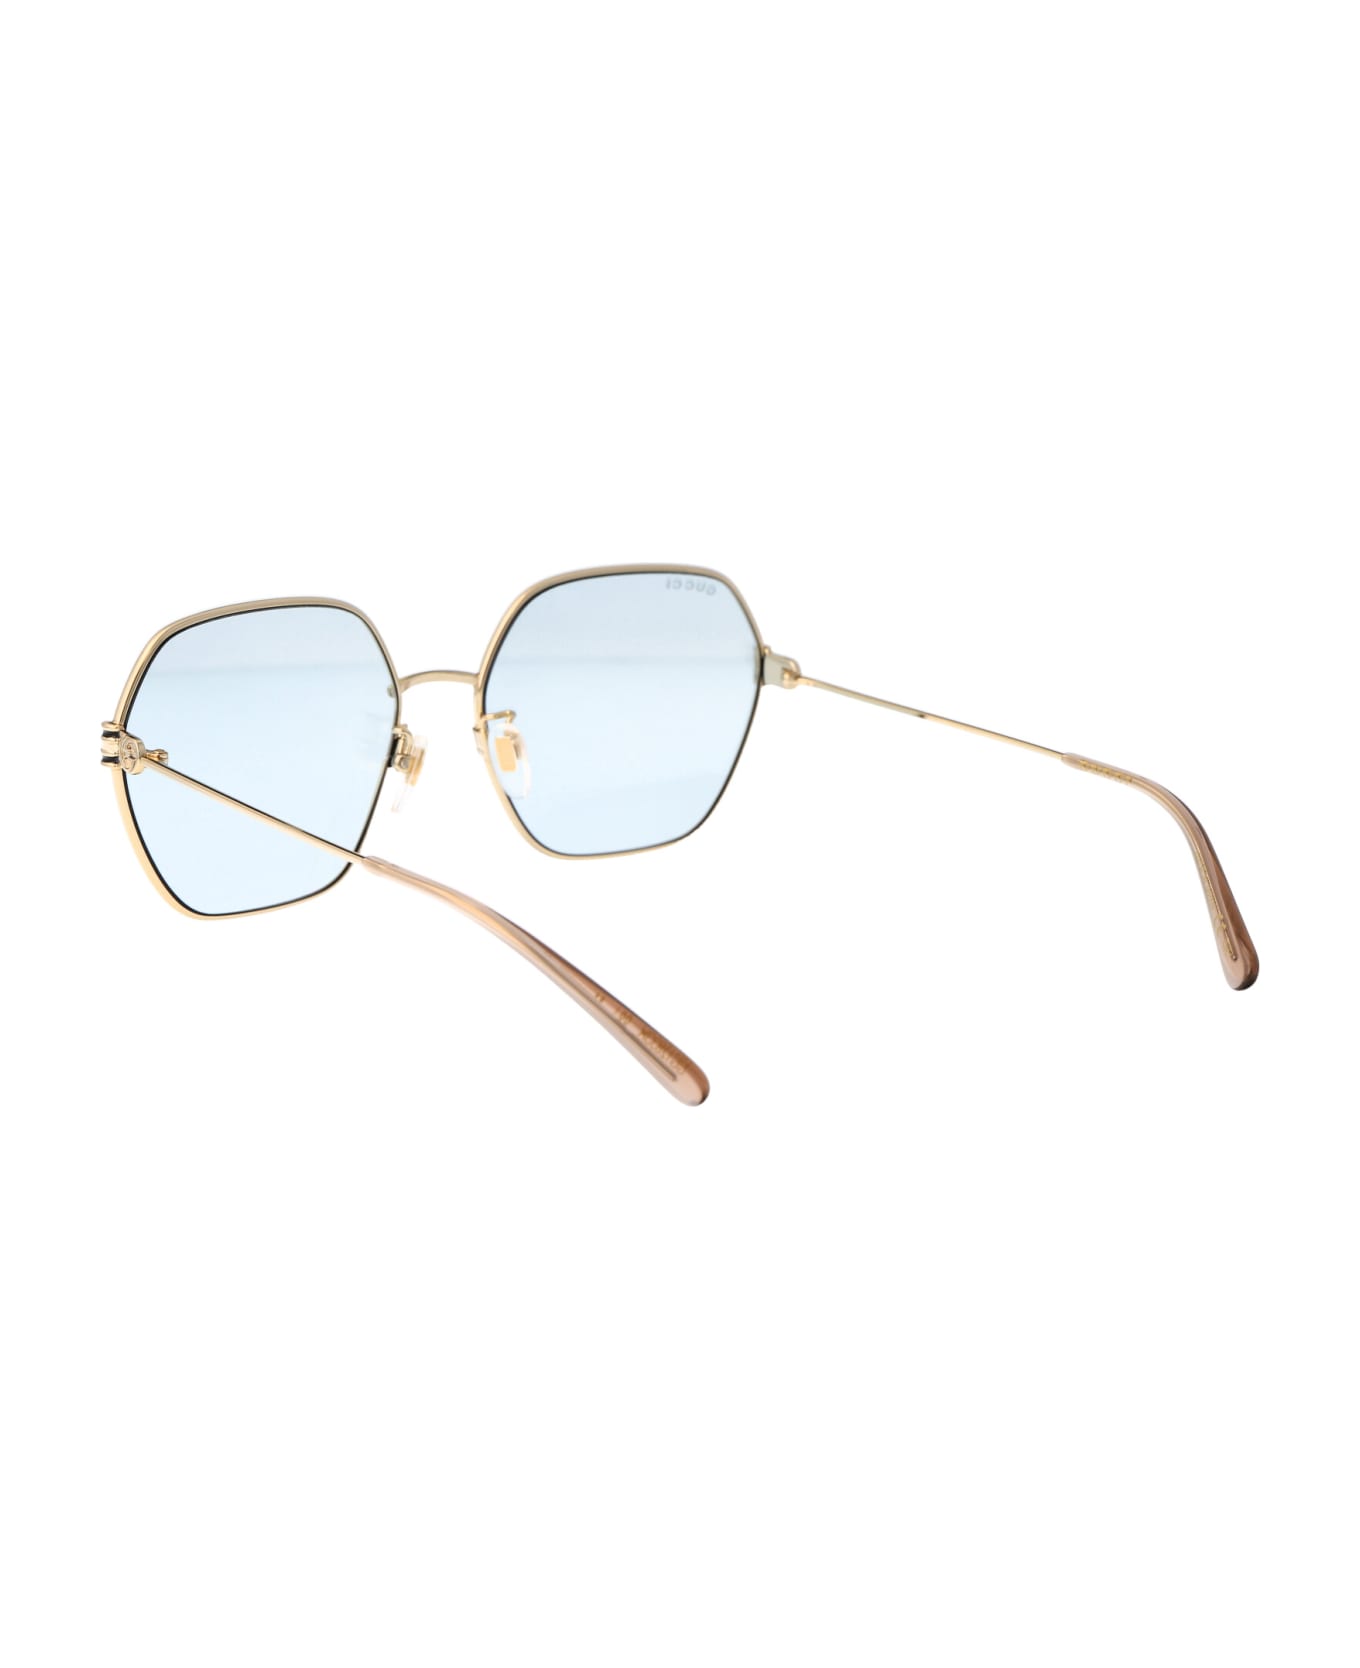 Gucci Eyewear Gg1285sa Sunglasses - 004 GOLD GOLD LIGHT BLUE